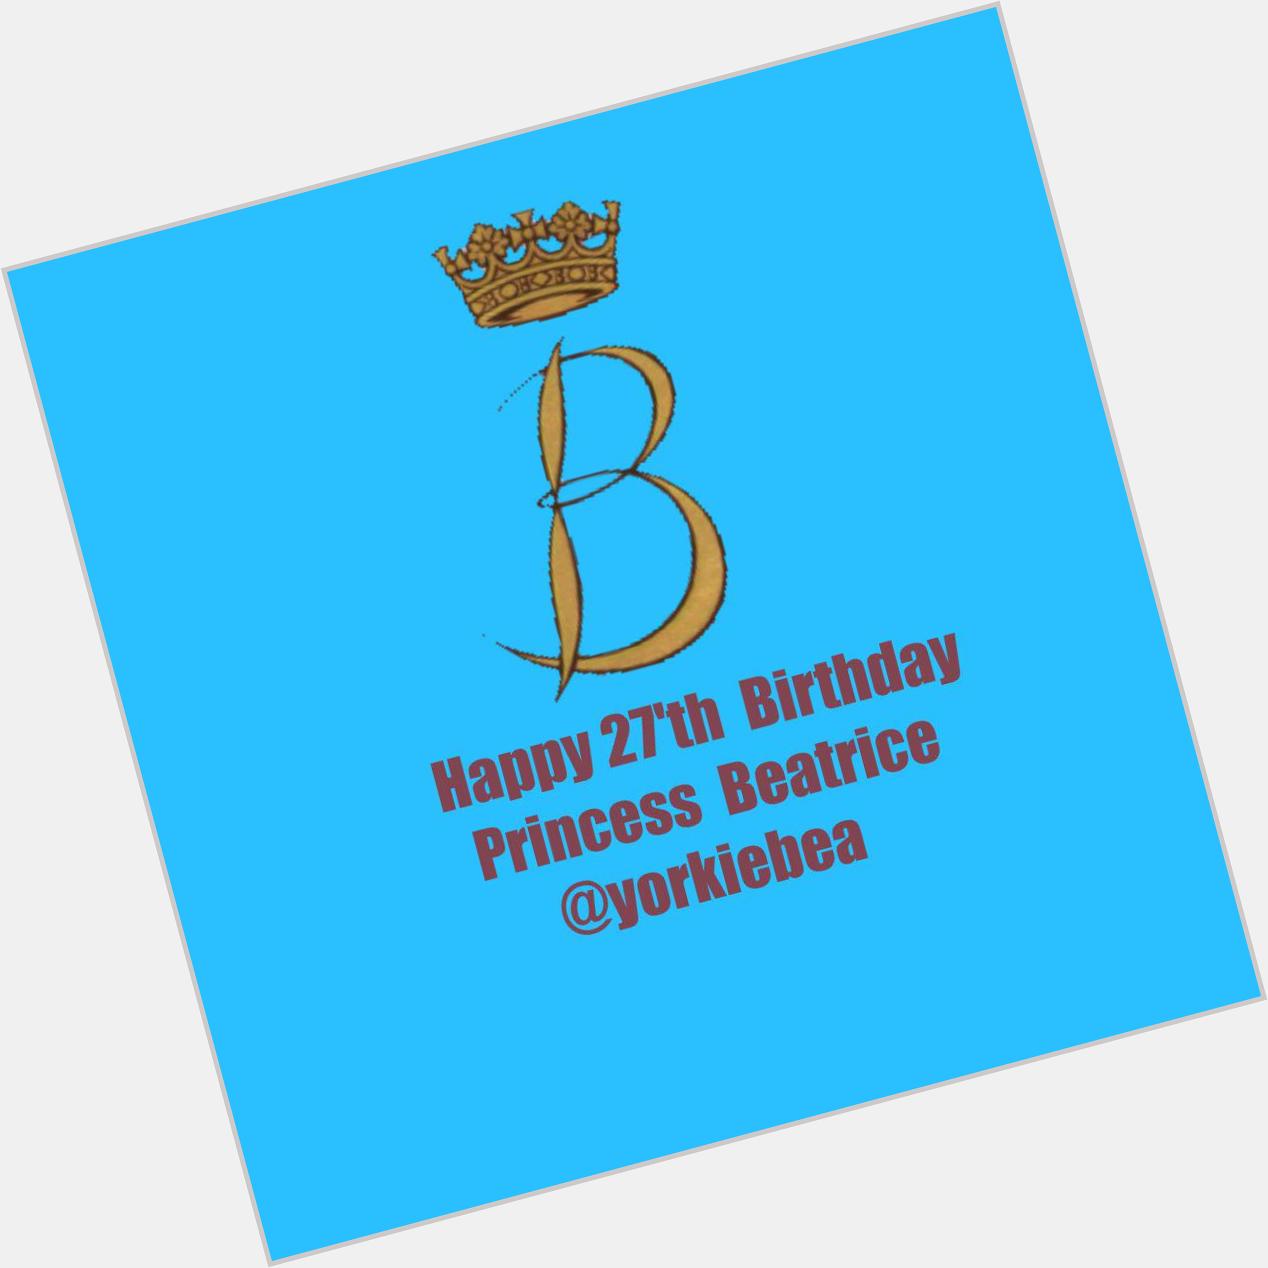 Happy 27 th Birthday Princess Beatrice  